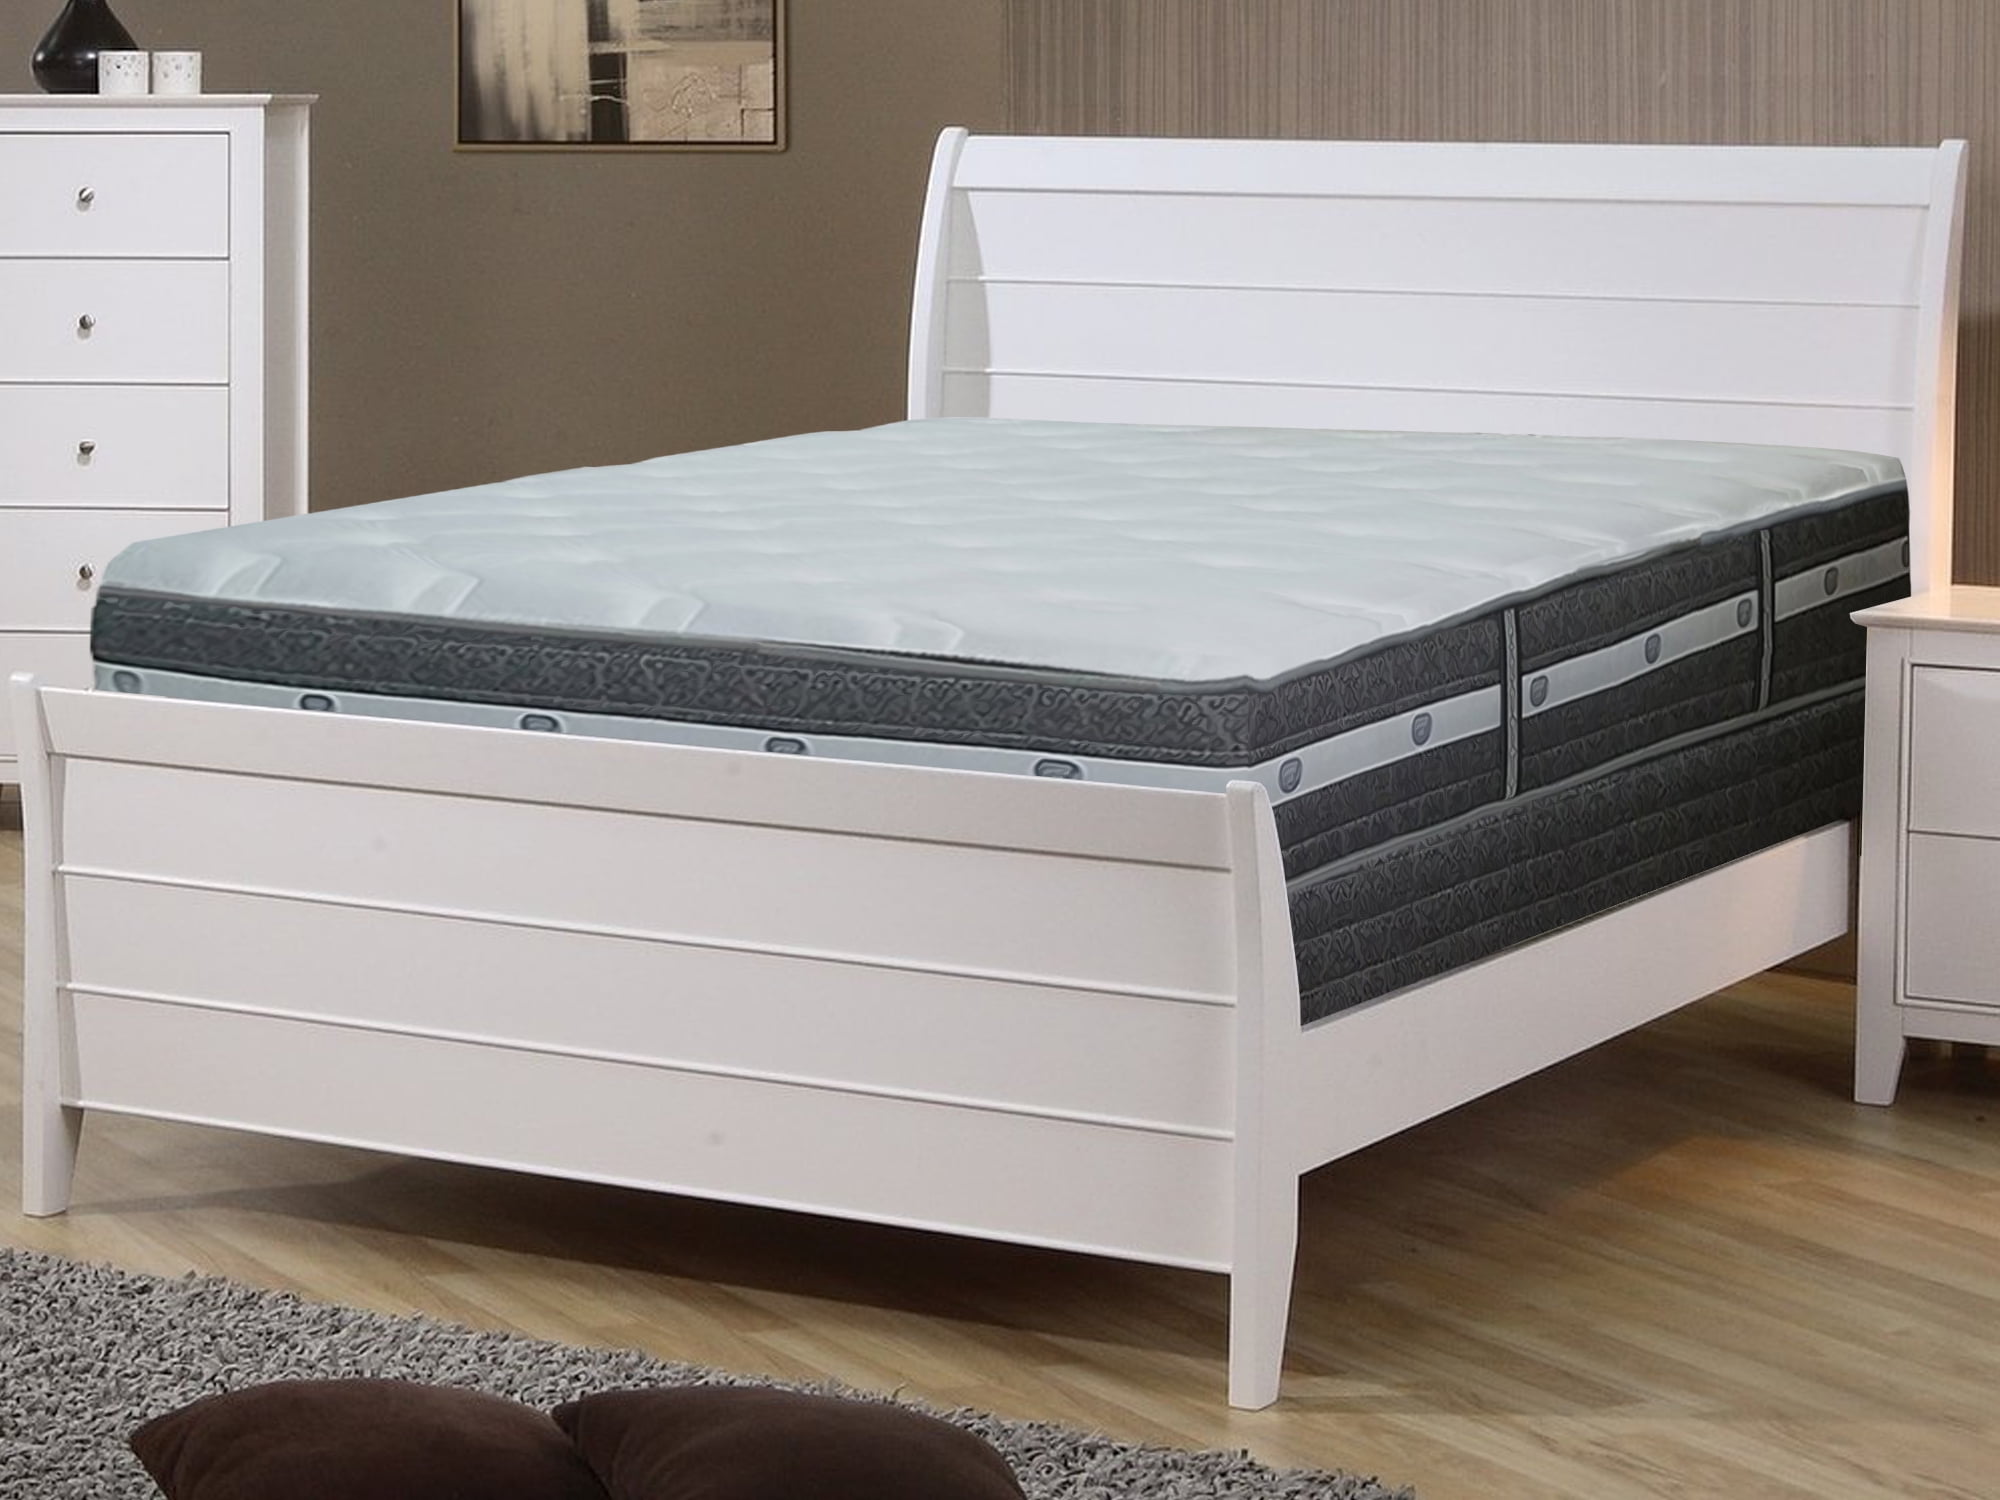 queen size bed frame mattress box spring